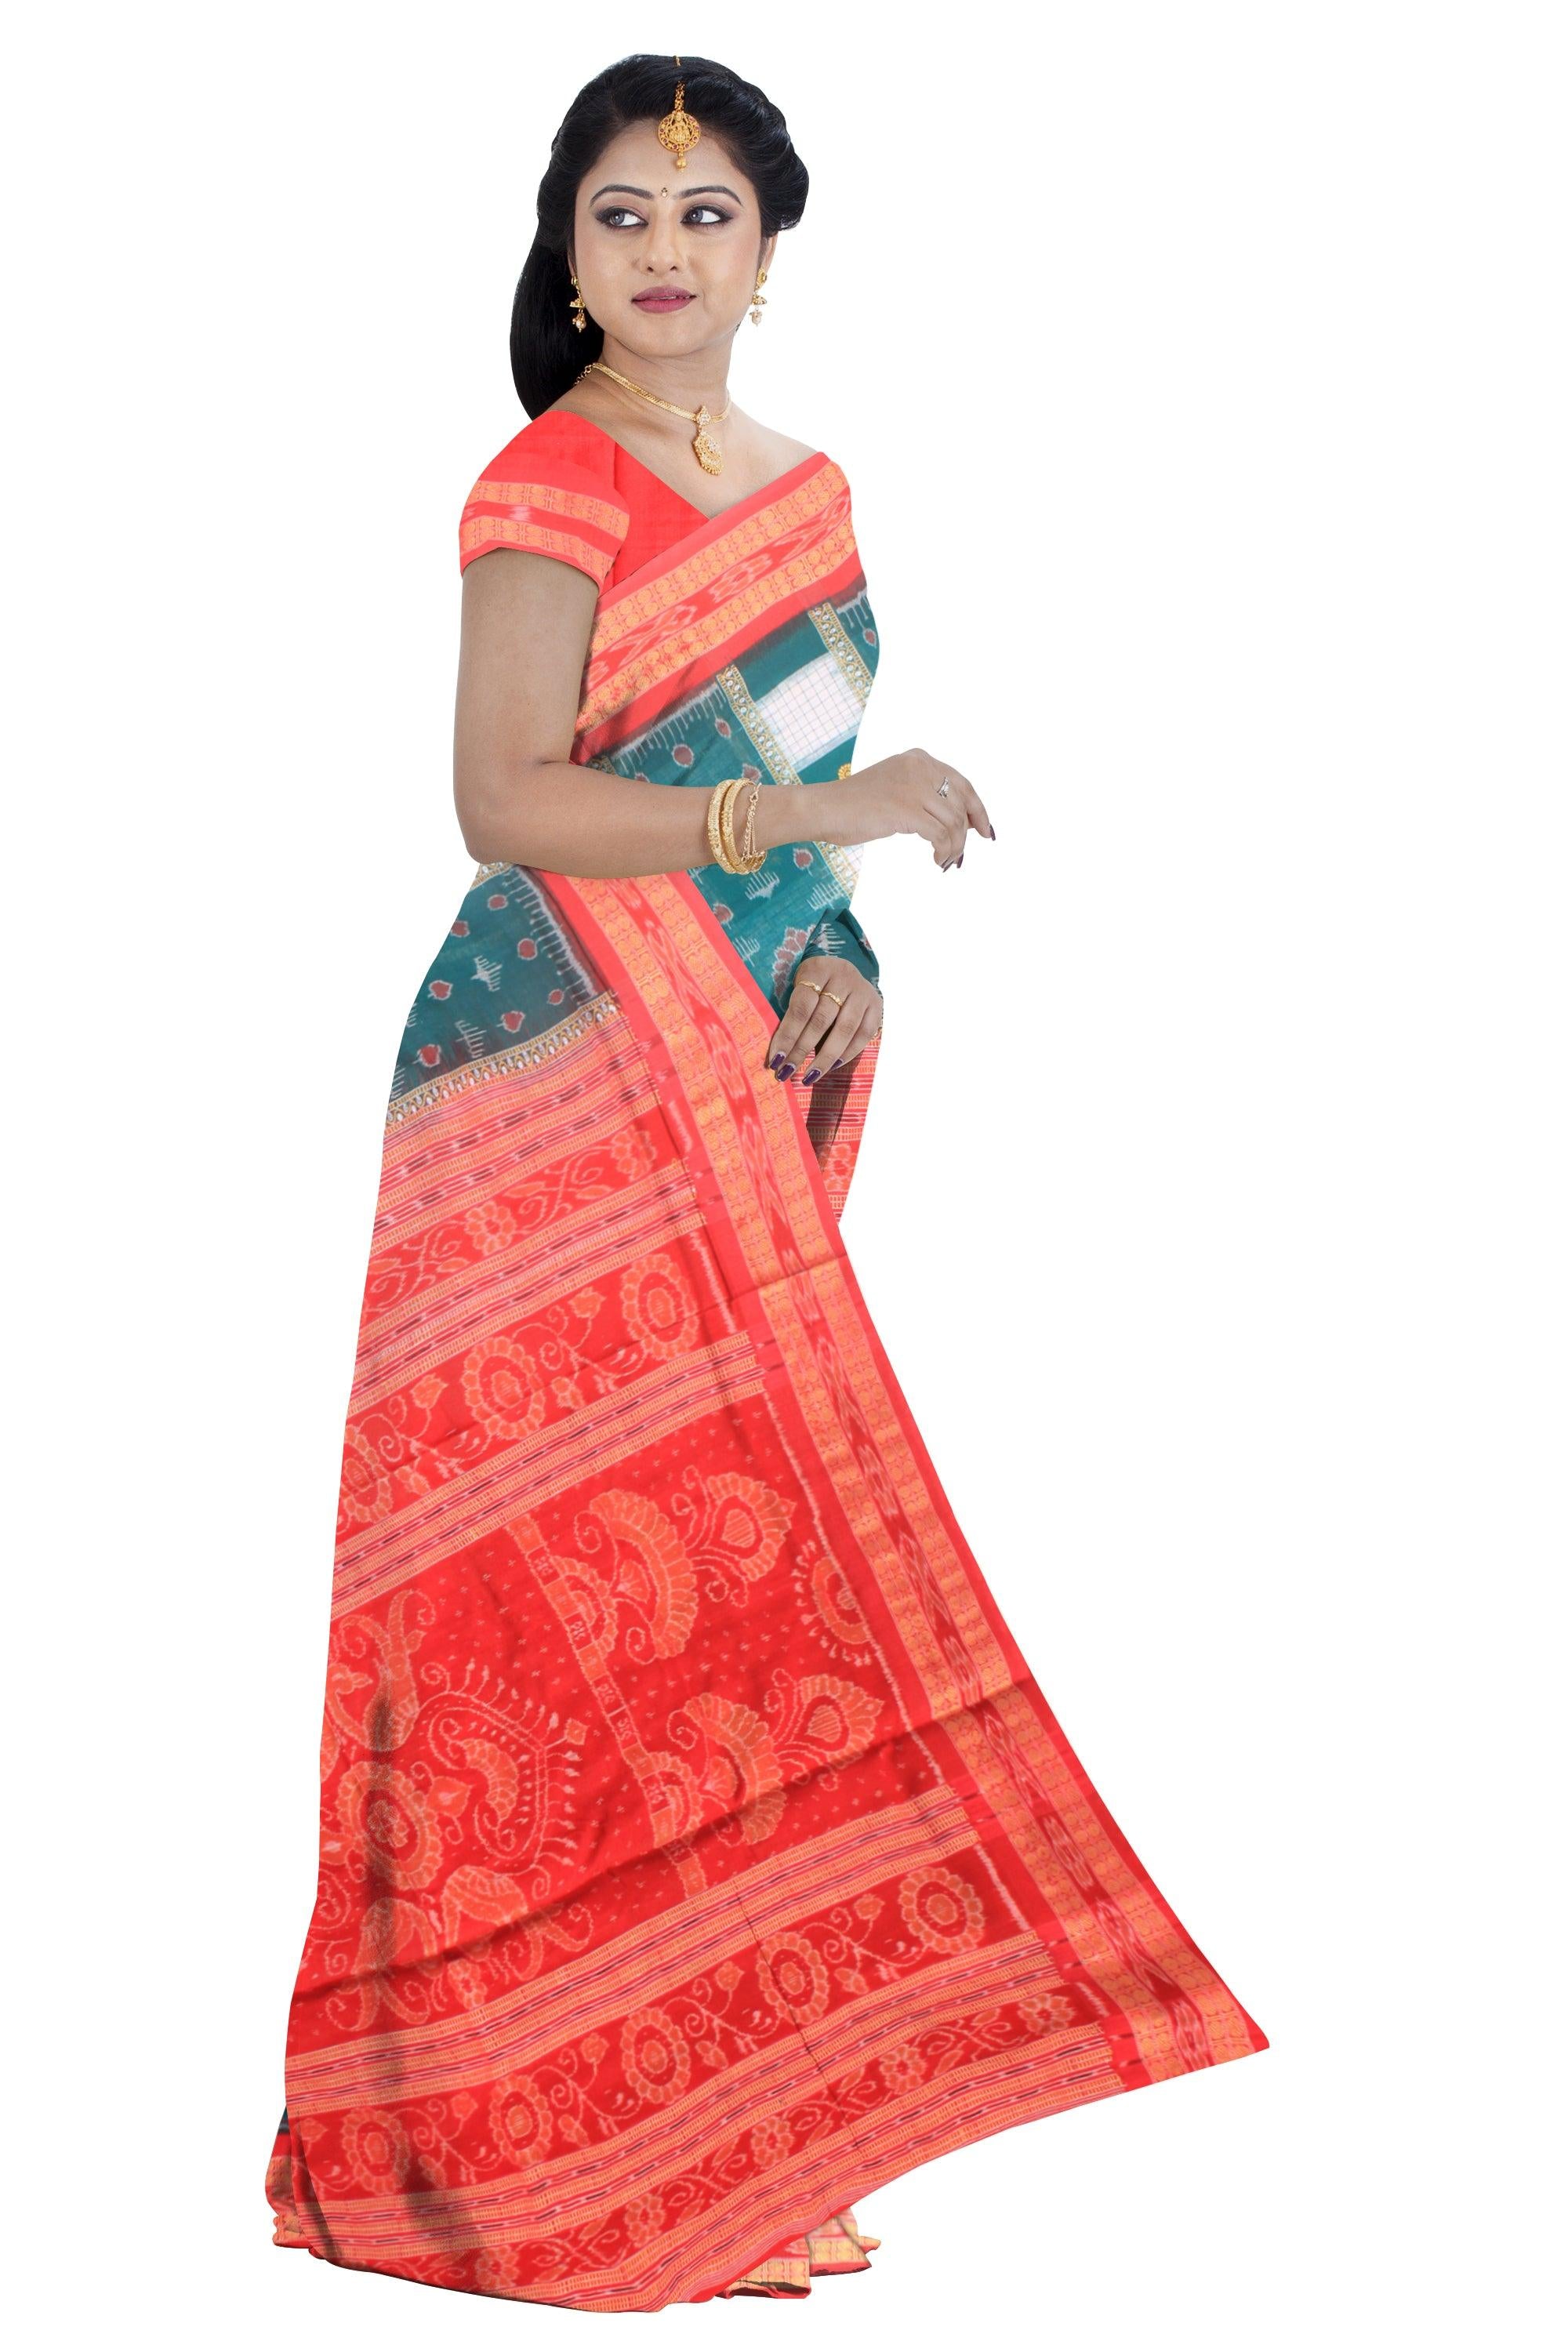 Sambalpuri Cotton Saree in Dark blue and white Color in box  design with blouse piece. - Koshali Arts & Crafts Enterprise